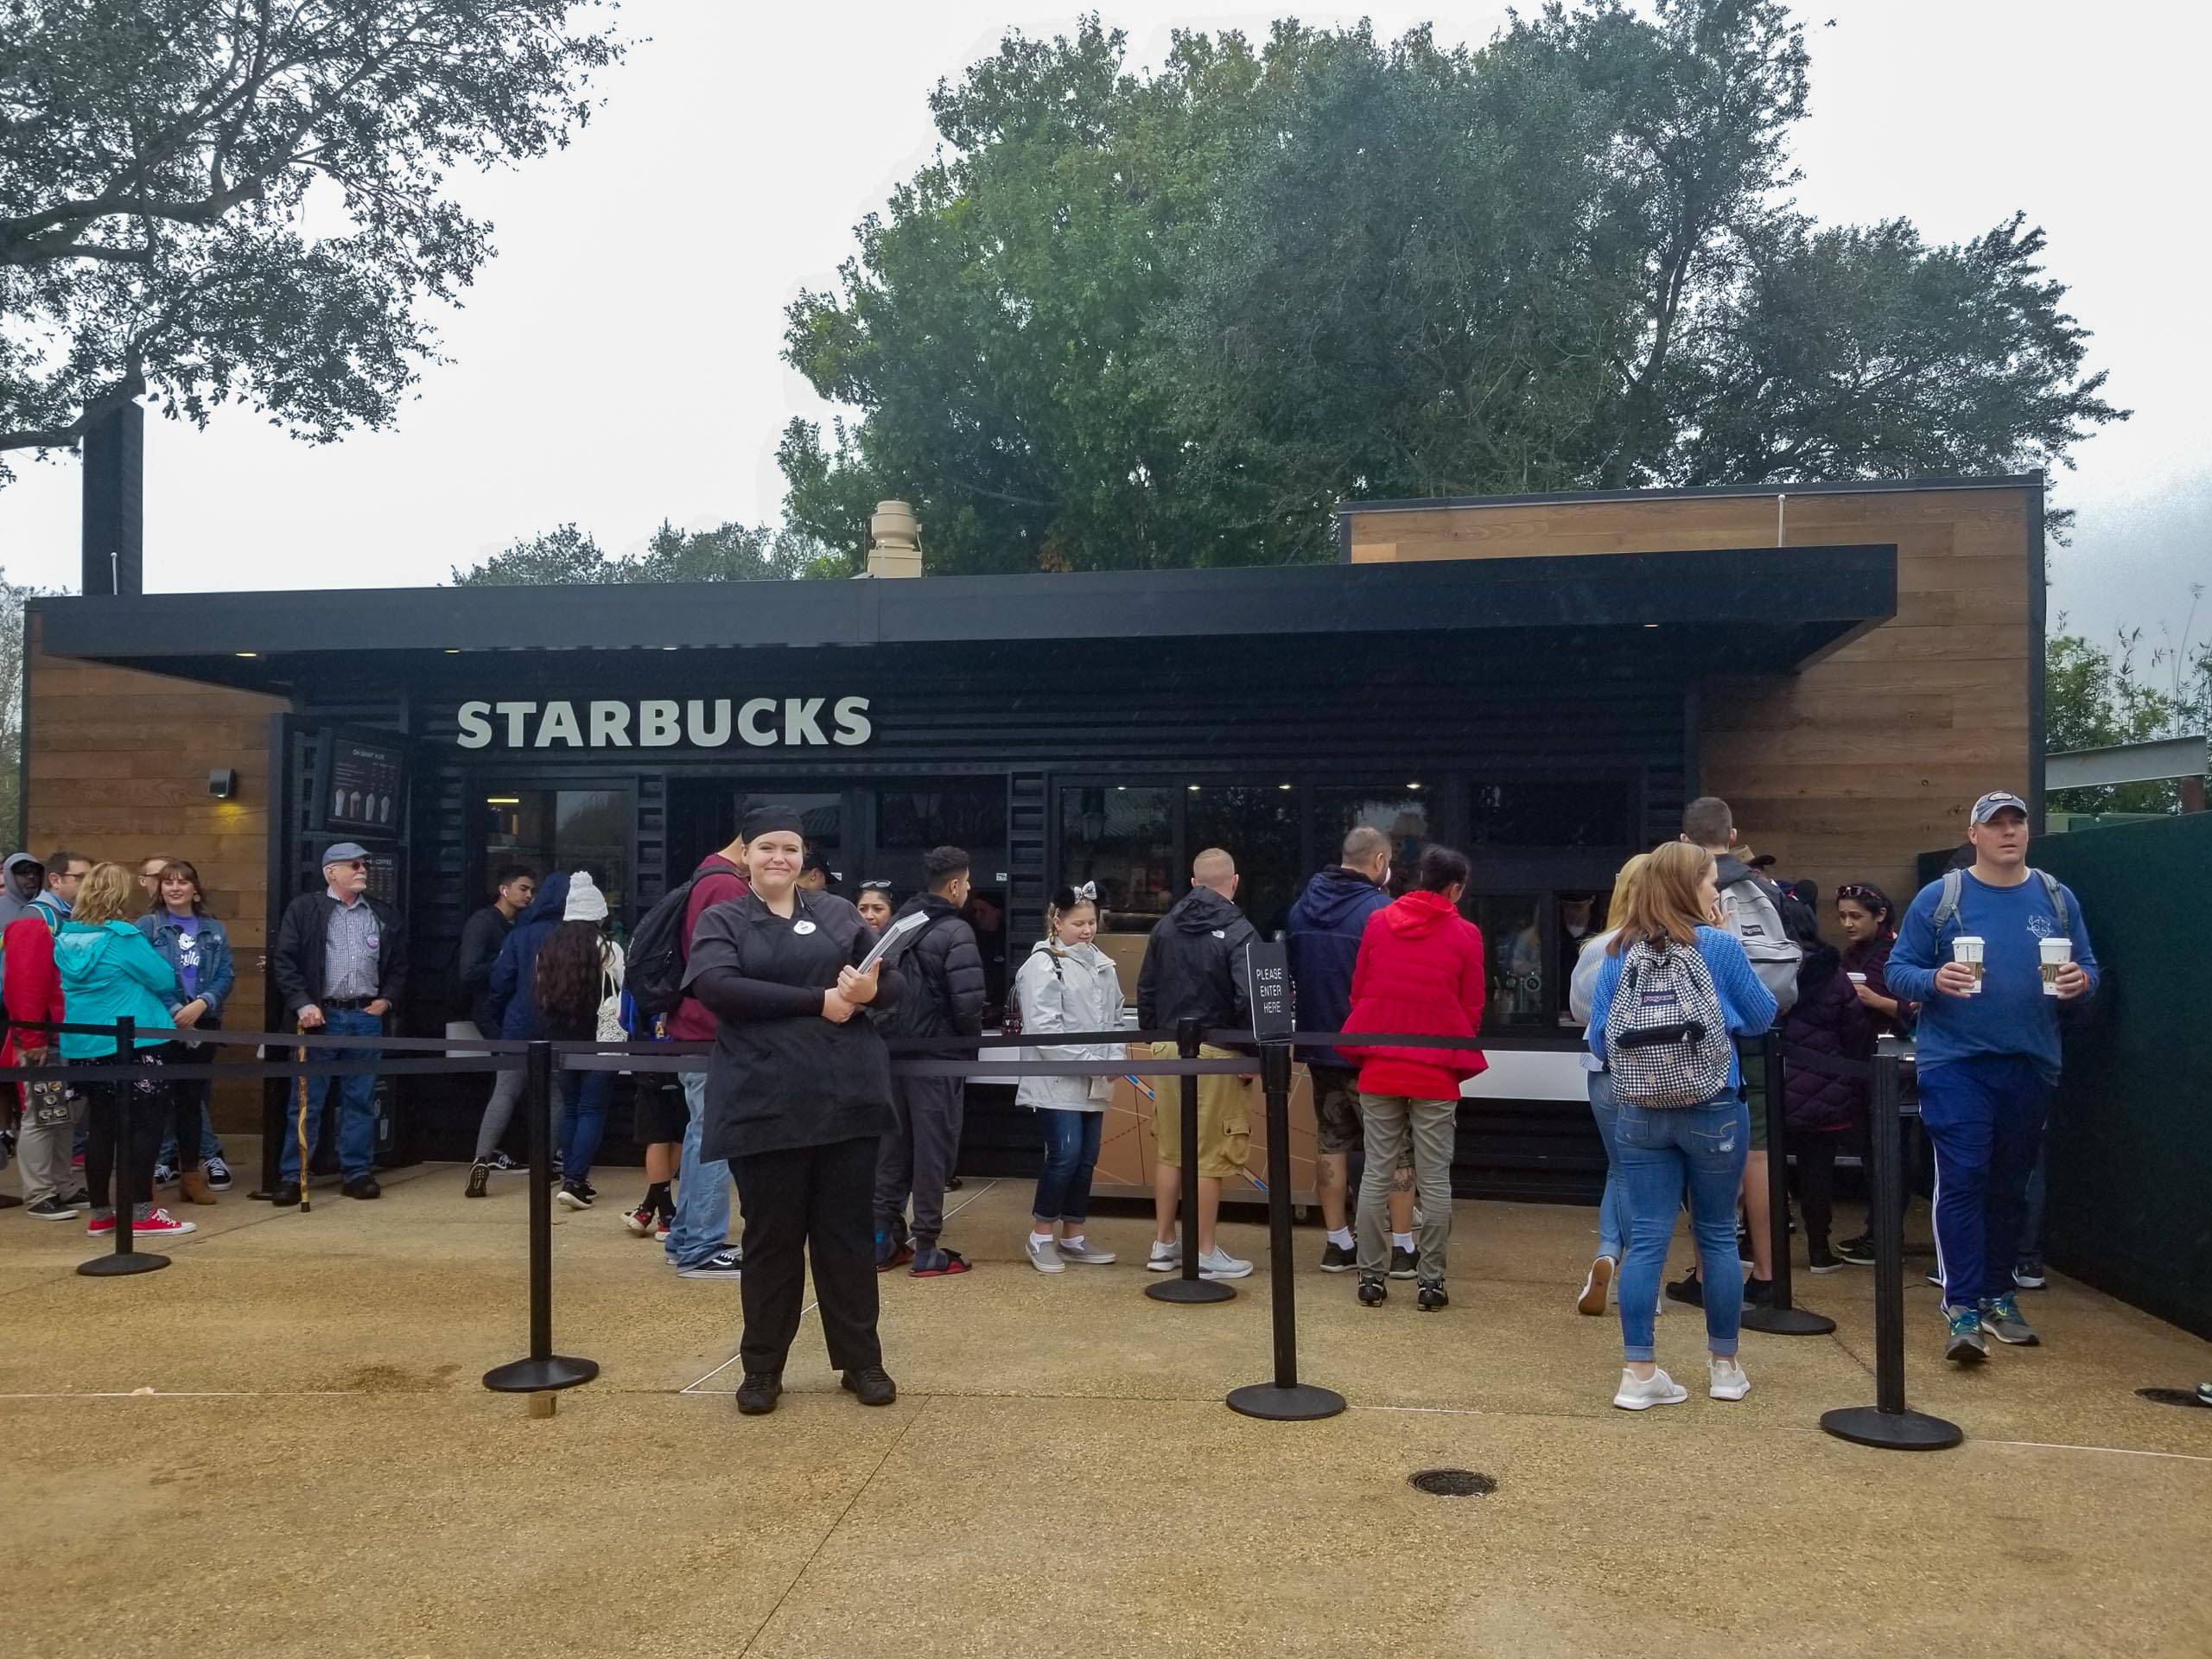 PHOTO - Epcot's temporary Starbucks Traveler's Café is now open